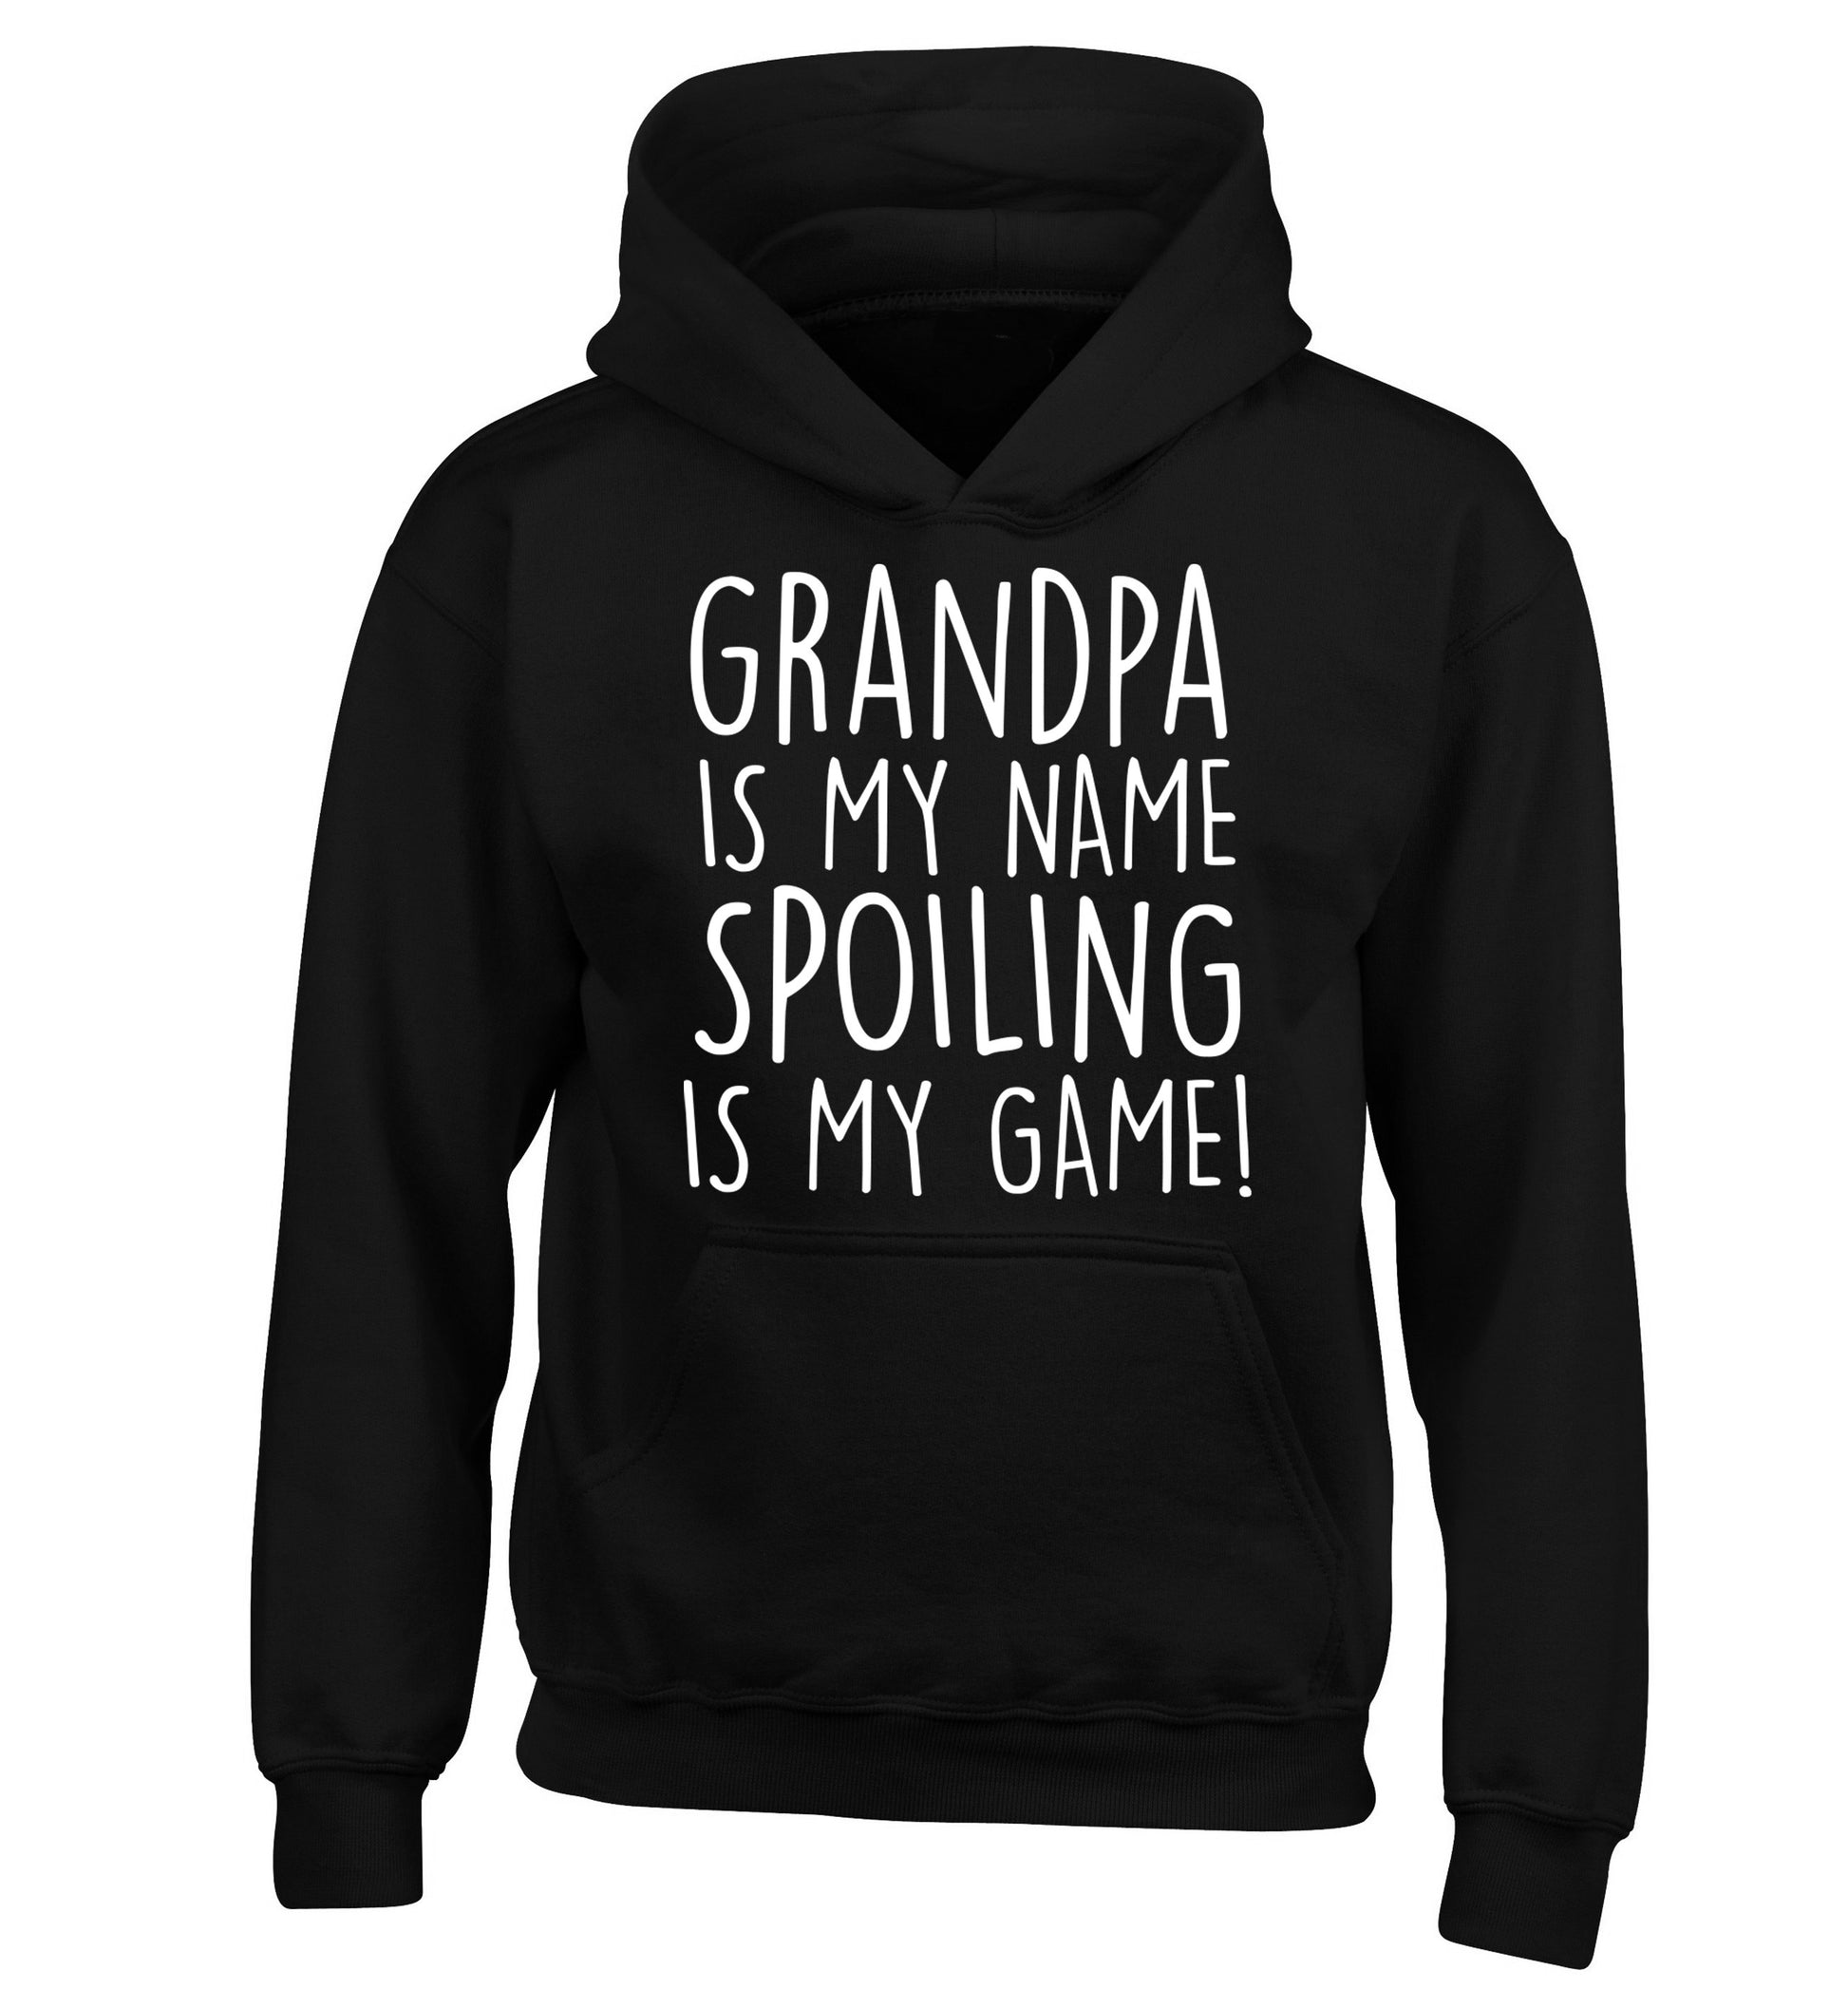 Grandpa is my name, spoiling is my game children's black hoodie 12-14 Years